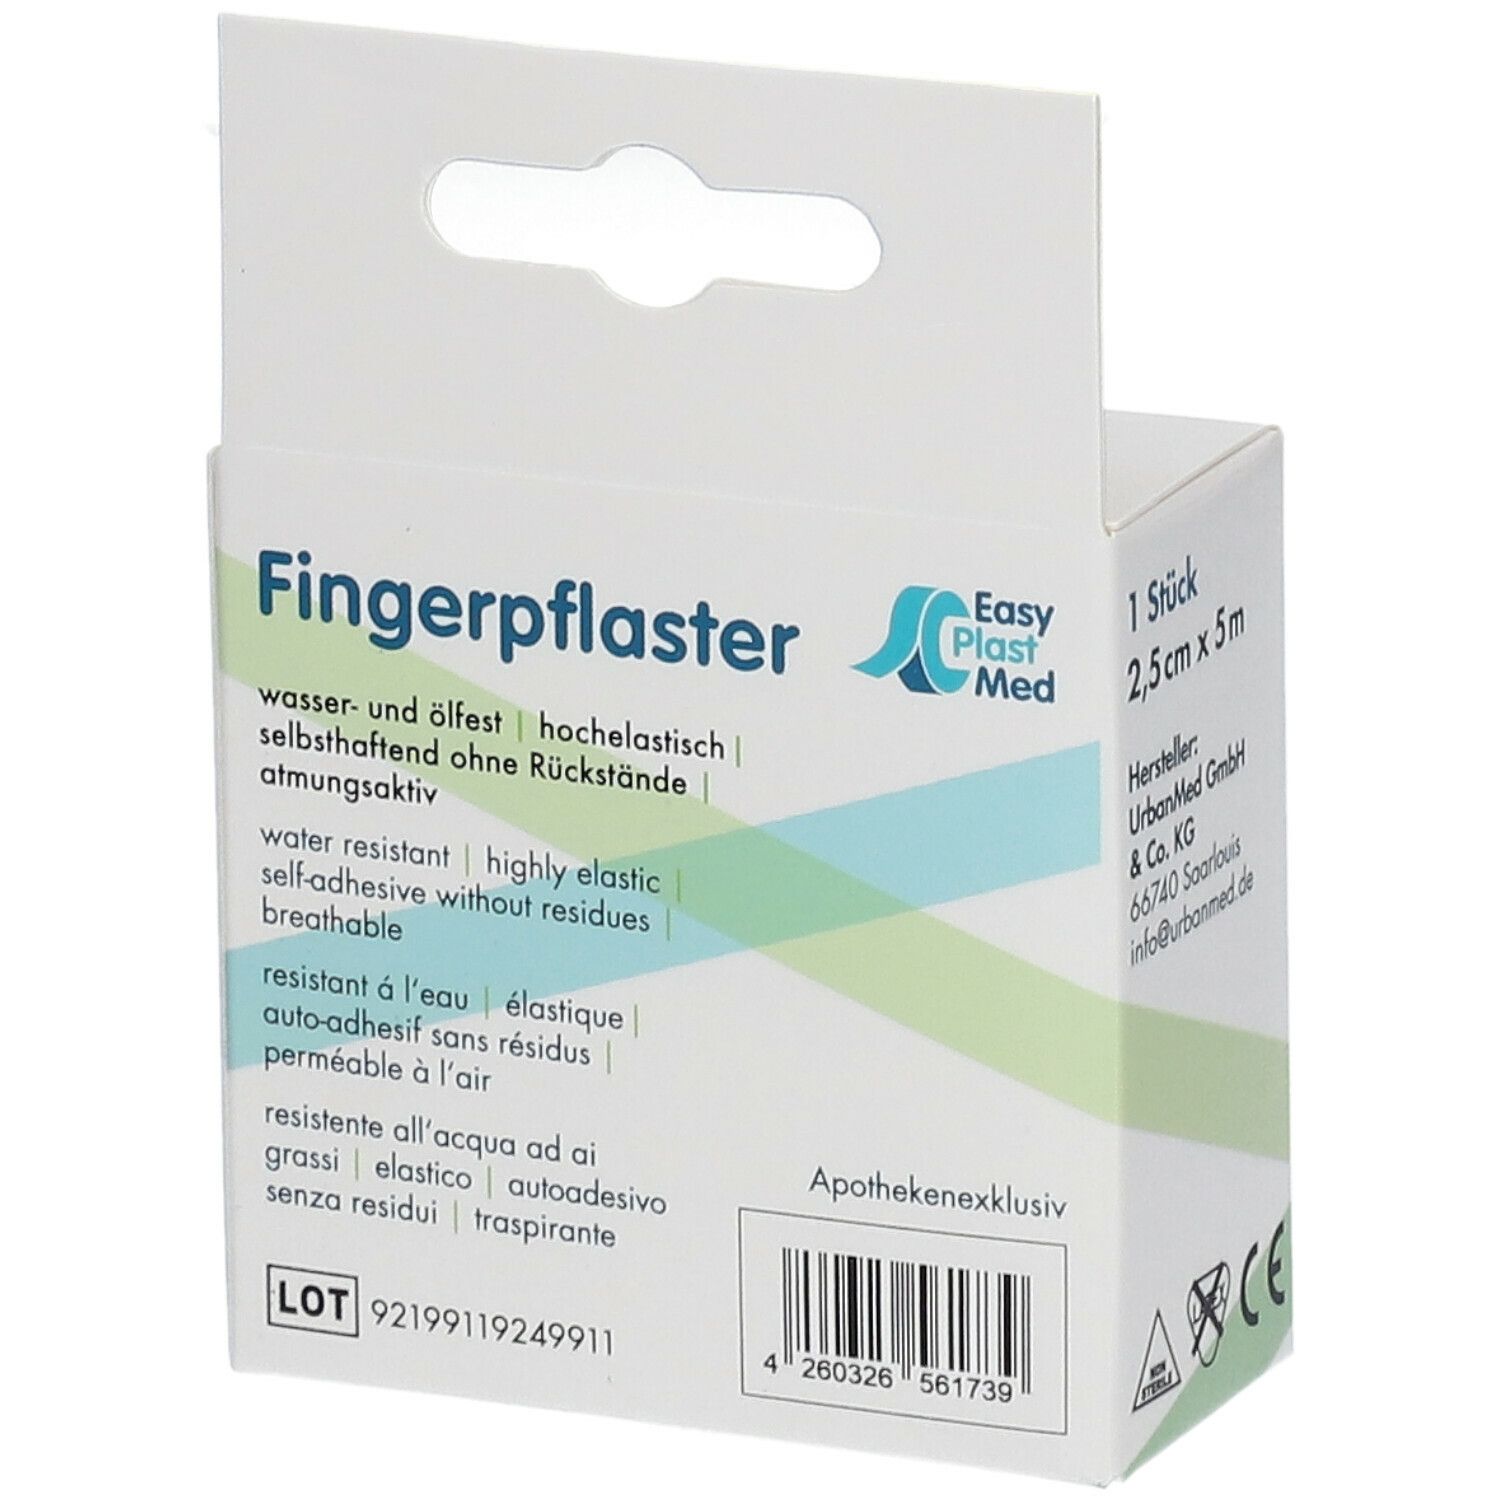 EasyPlast Med Fingerpflaster 2.5cm x 5m 1 Stück, online kaufen: 2